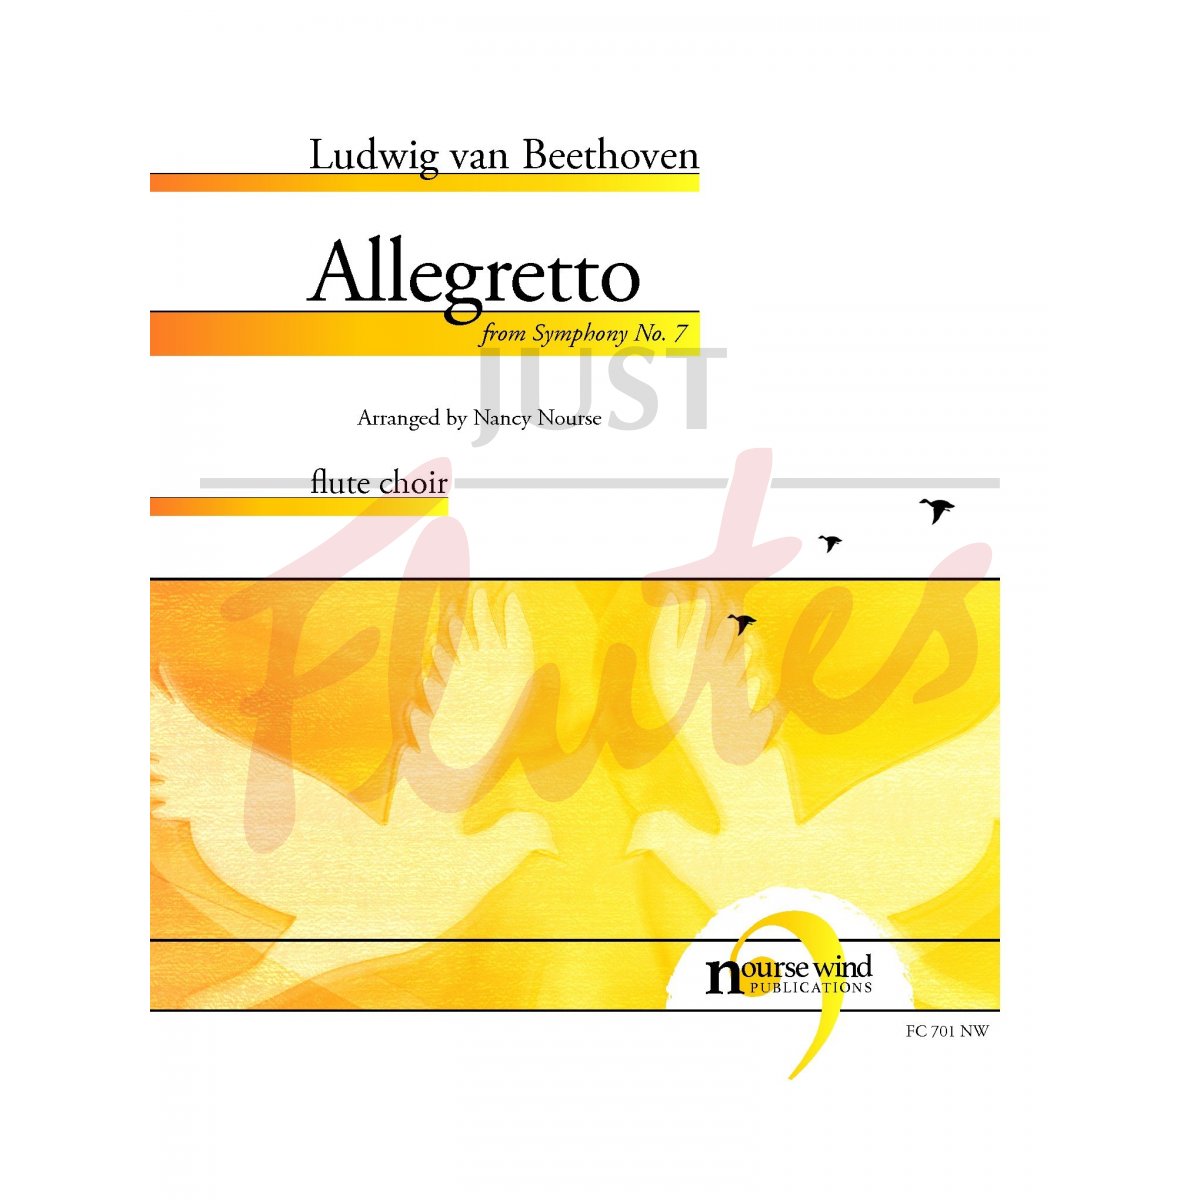 Allegretto from Symphony No 7 [Flute Choir]